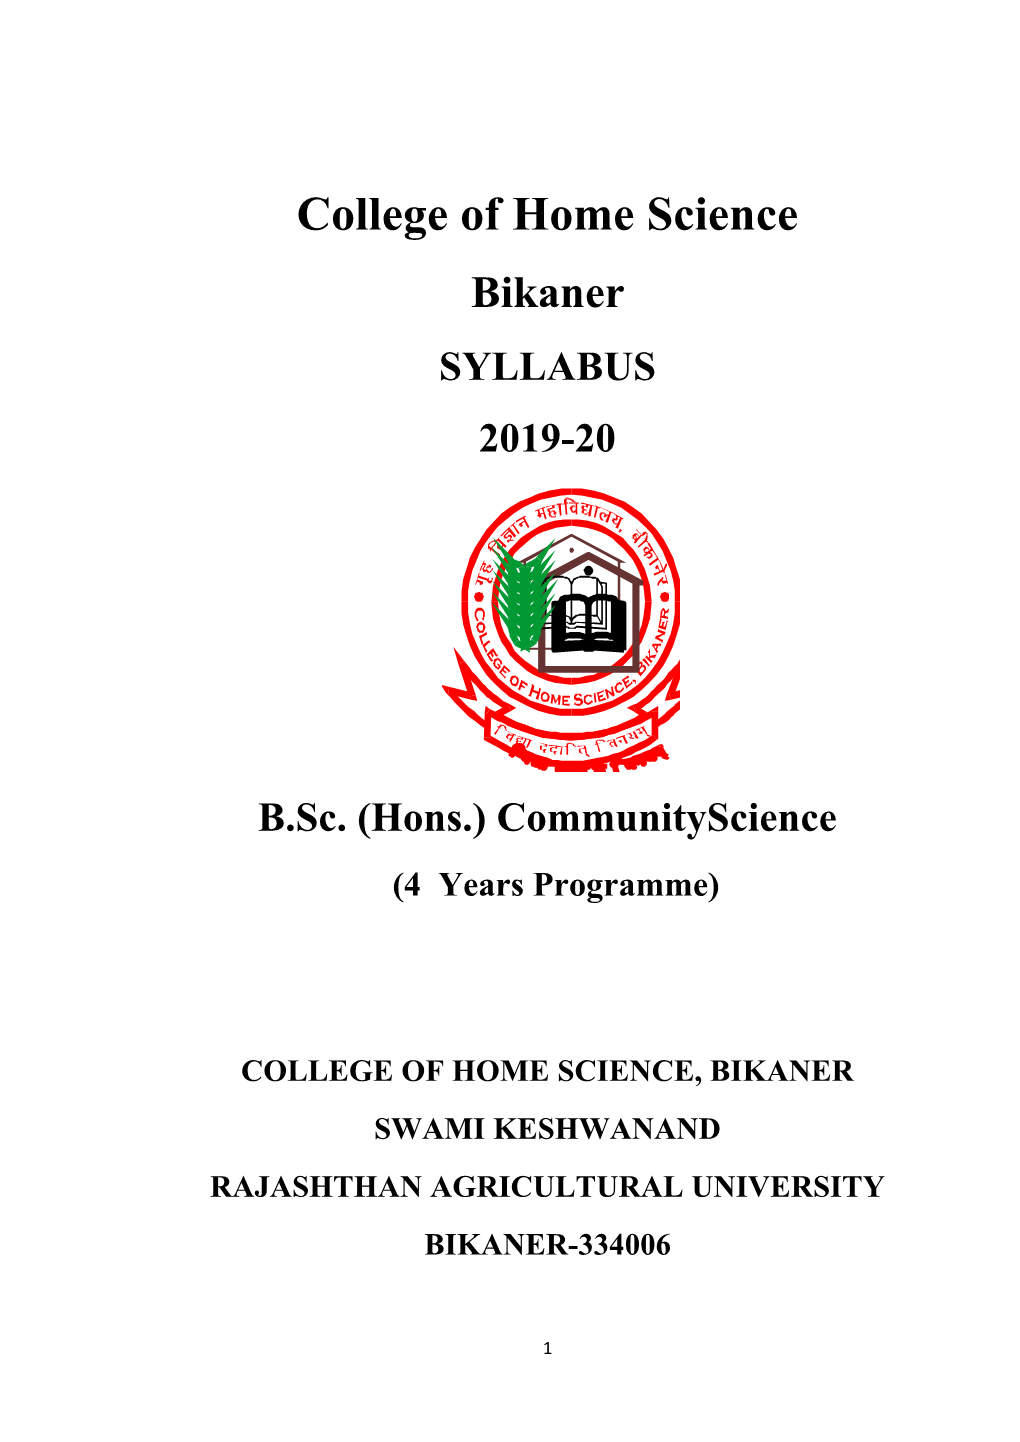 College of Home Science Bikaner SYLLABUS 2019-20